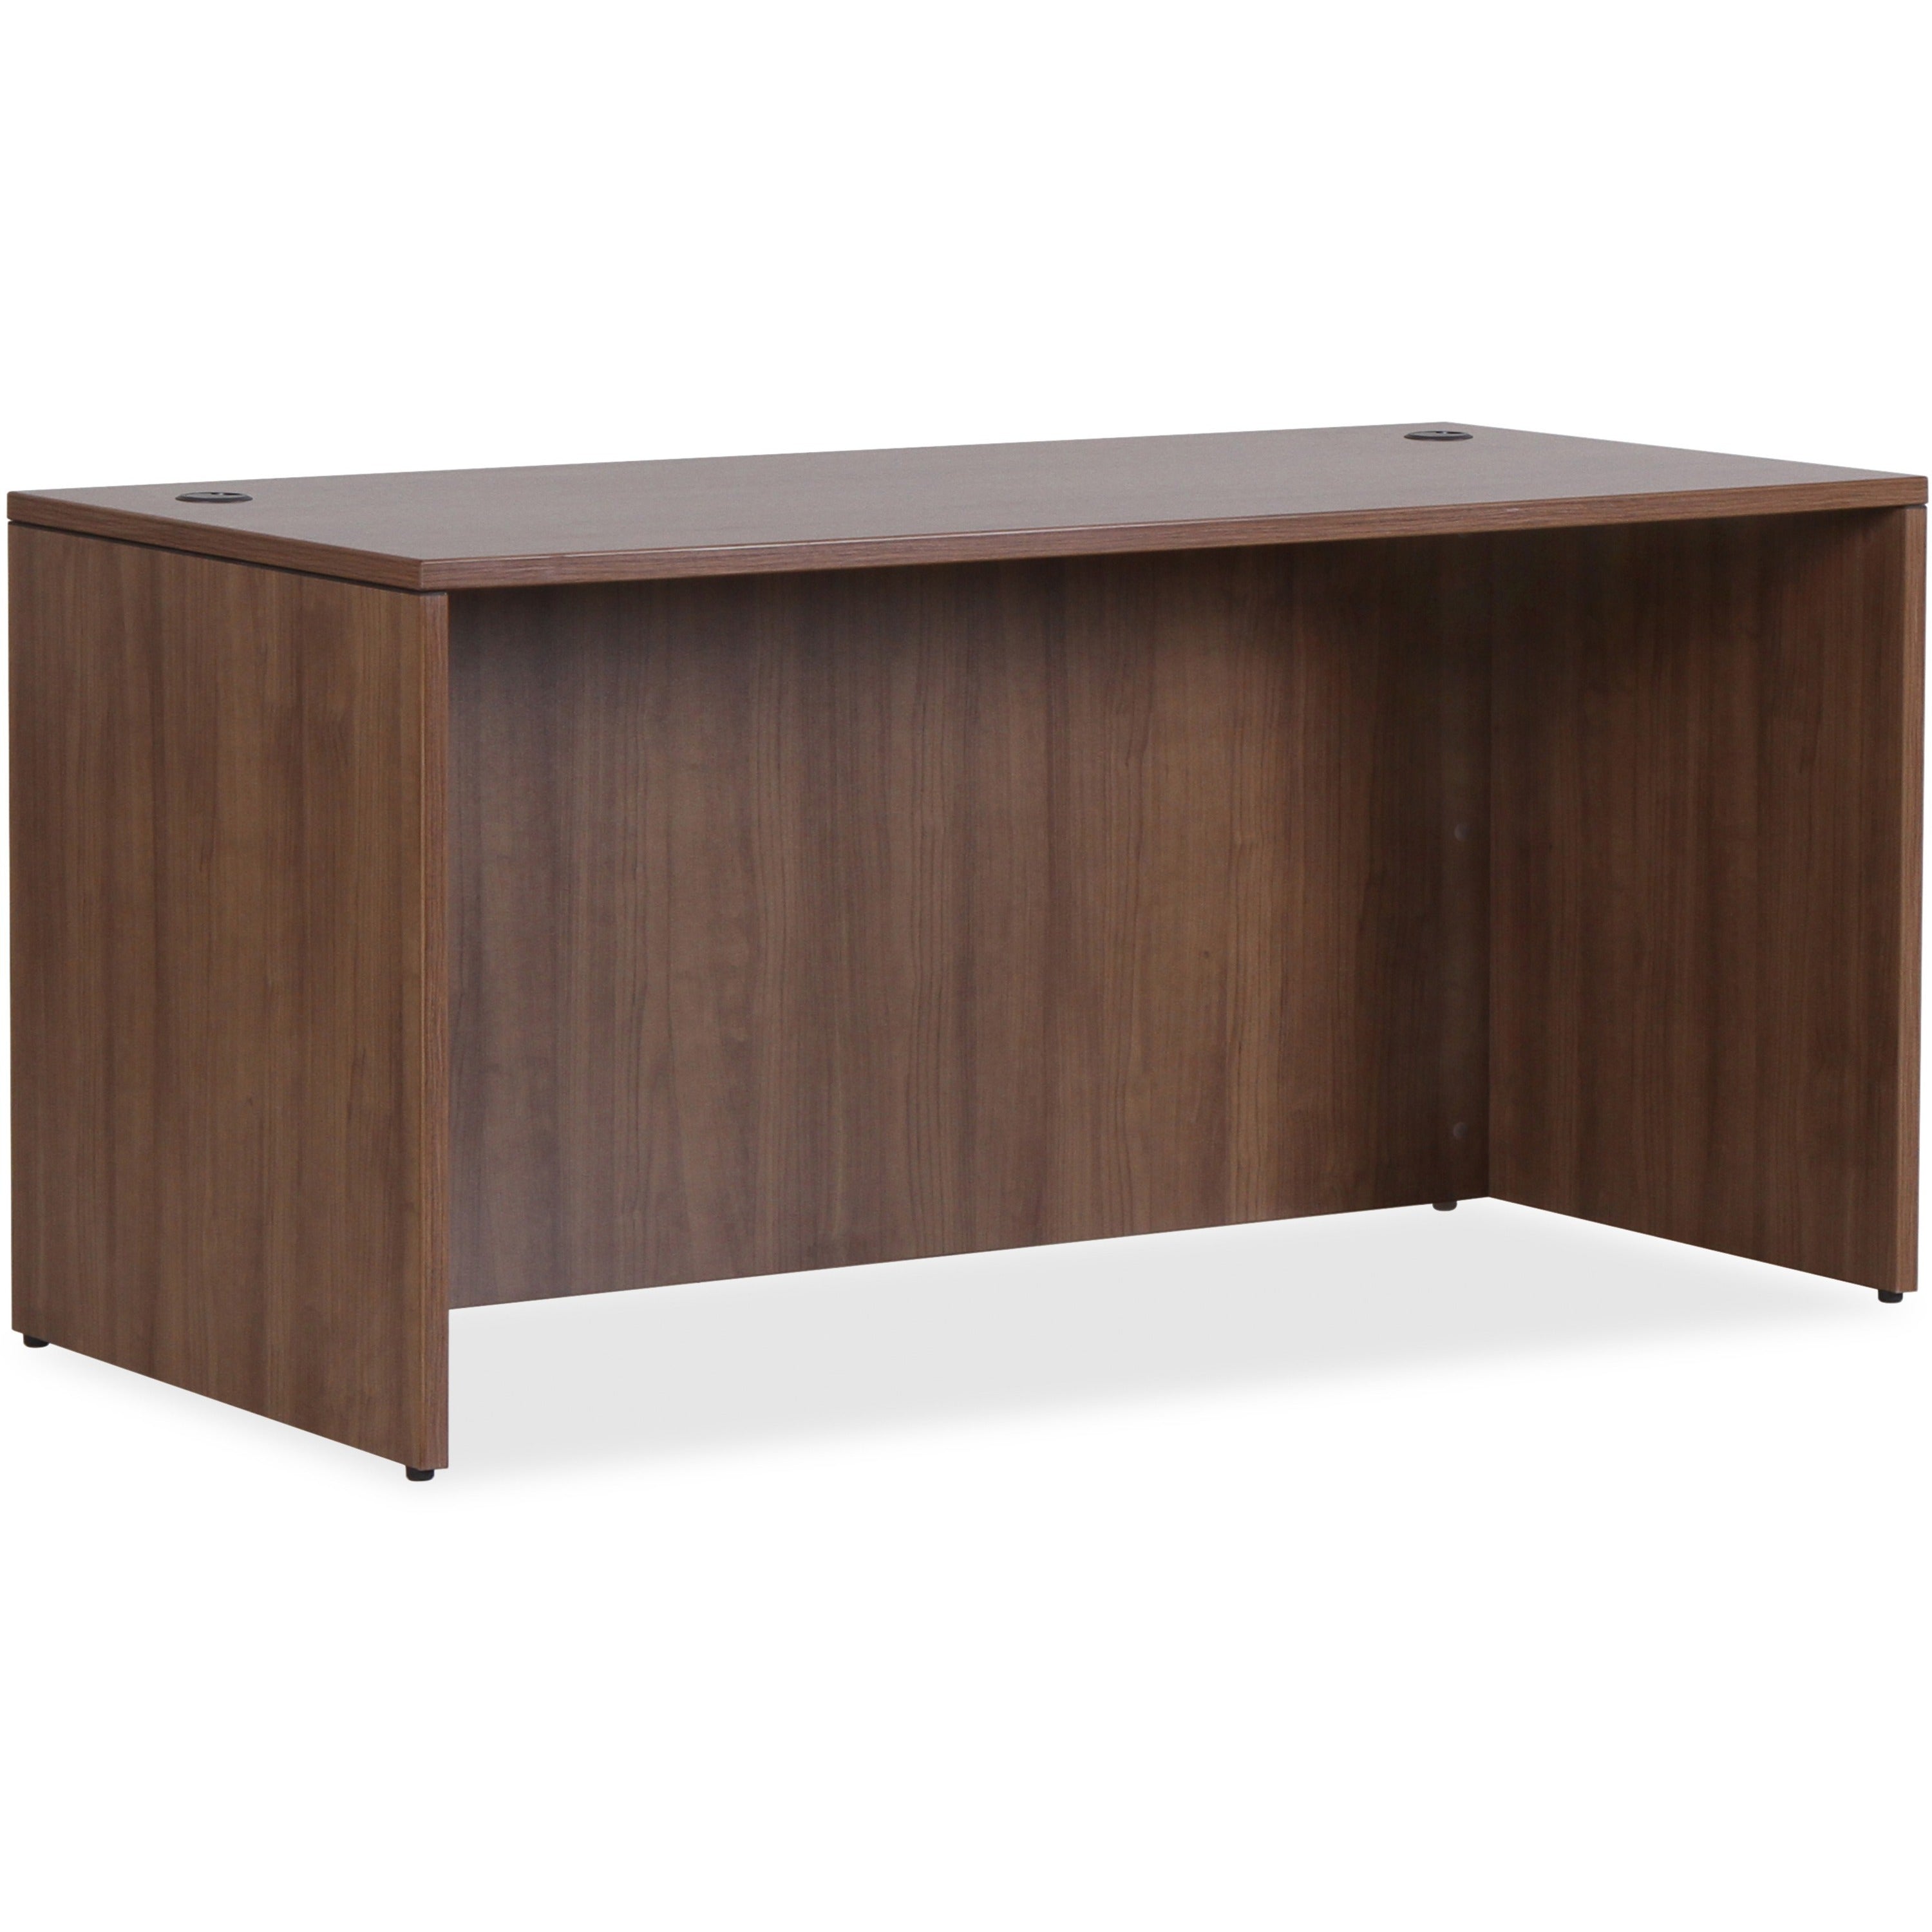 Lorell Essentials Series Rectangular Desk Shell - 1" Top, 70.9" x 35.4"29.5" Desk - Finish: Walnut Laminate - Lockable, Grommet, Modesty Panel, Adjustable Feet - For Office - 